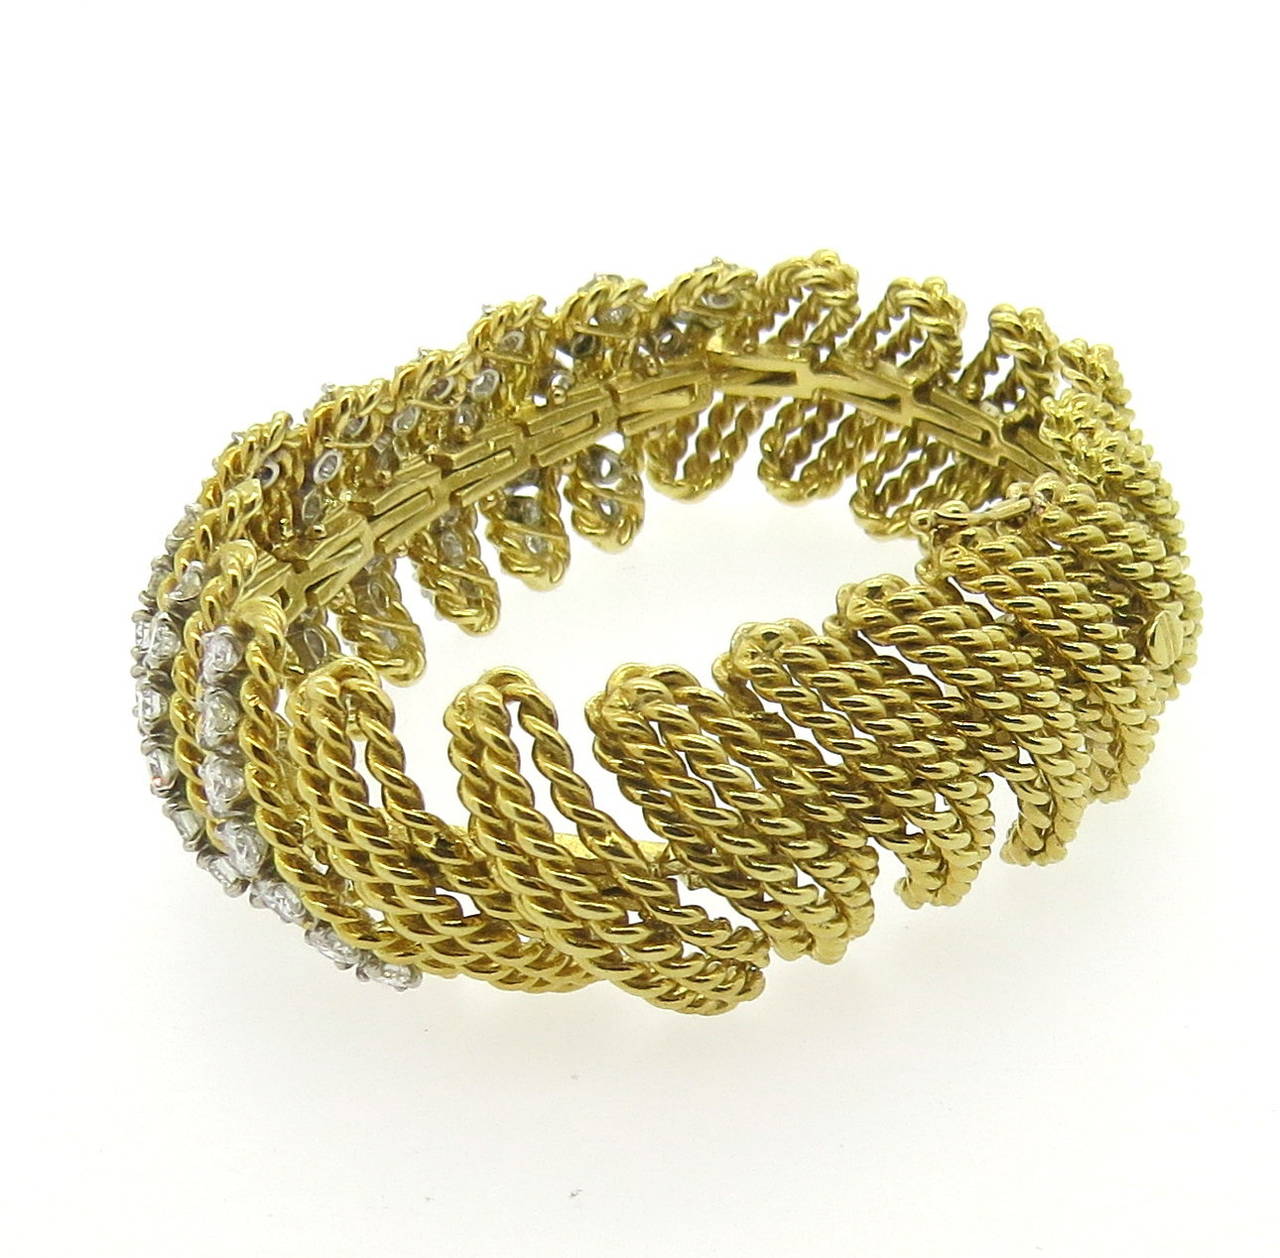 Impressive vintage 14k gold bracelet, set with approximately 7.00-7.50ctw in diamonds. Bracelet is 6 3/4